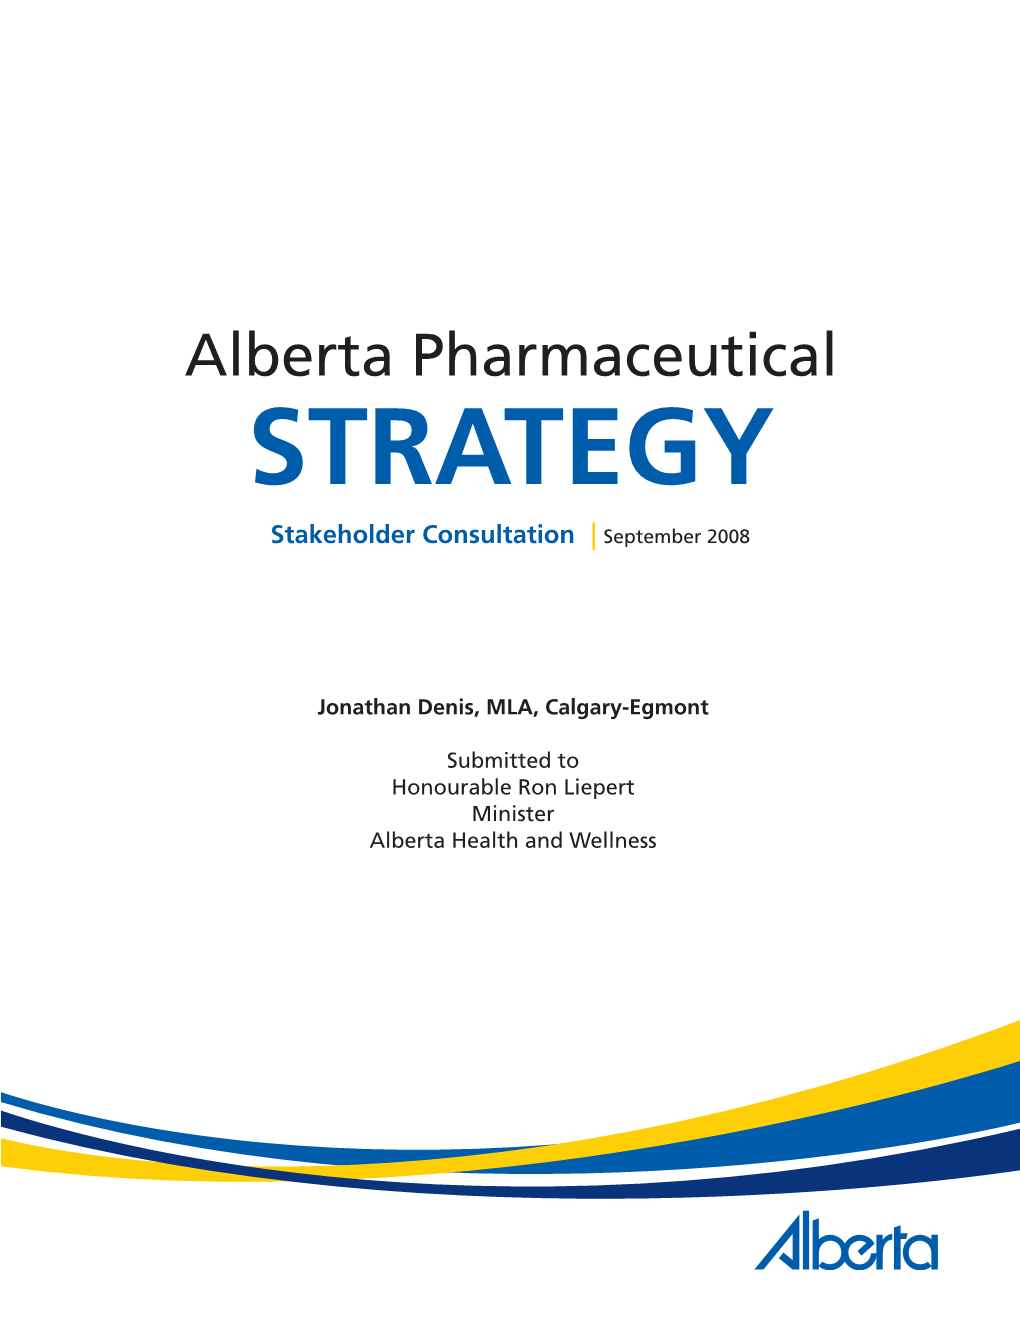 Alberta Pharmaceutical Strategy: Stakeholder Consultation